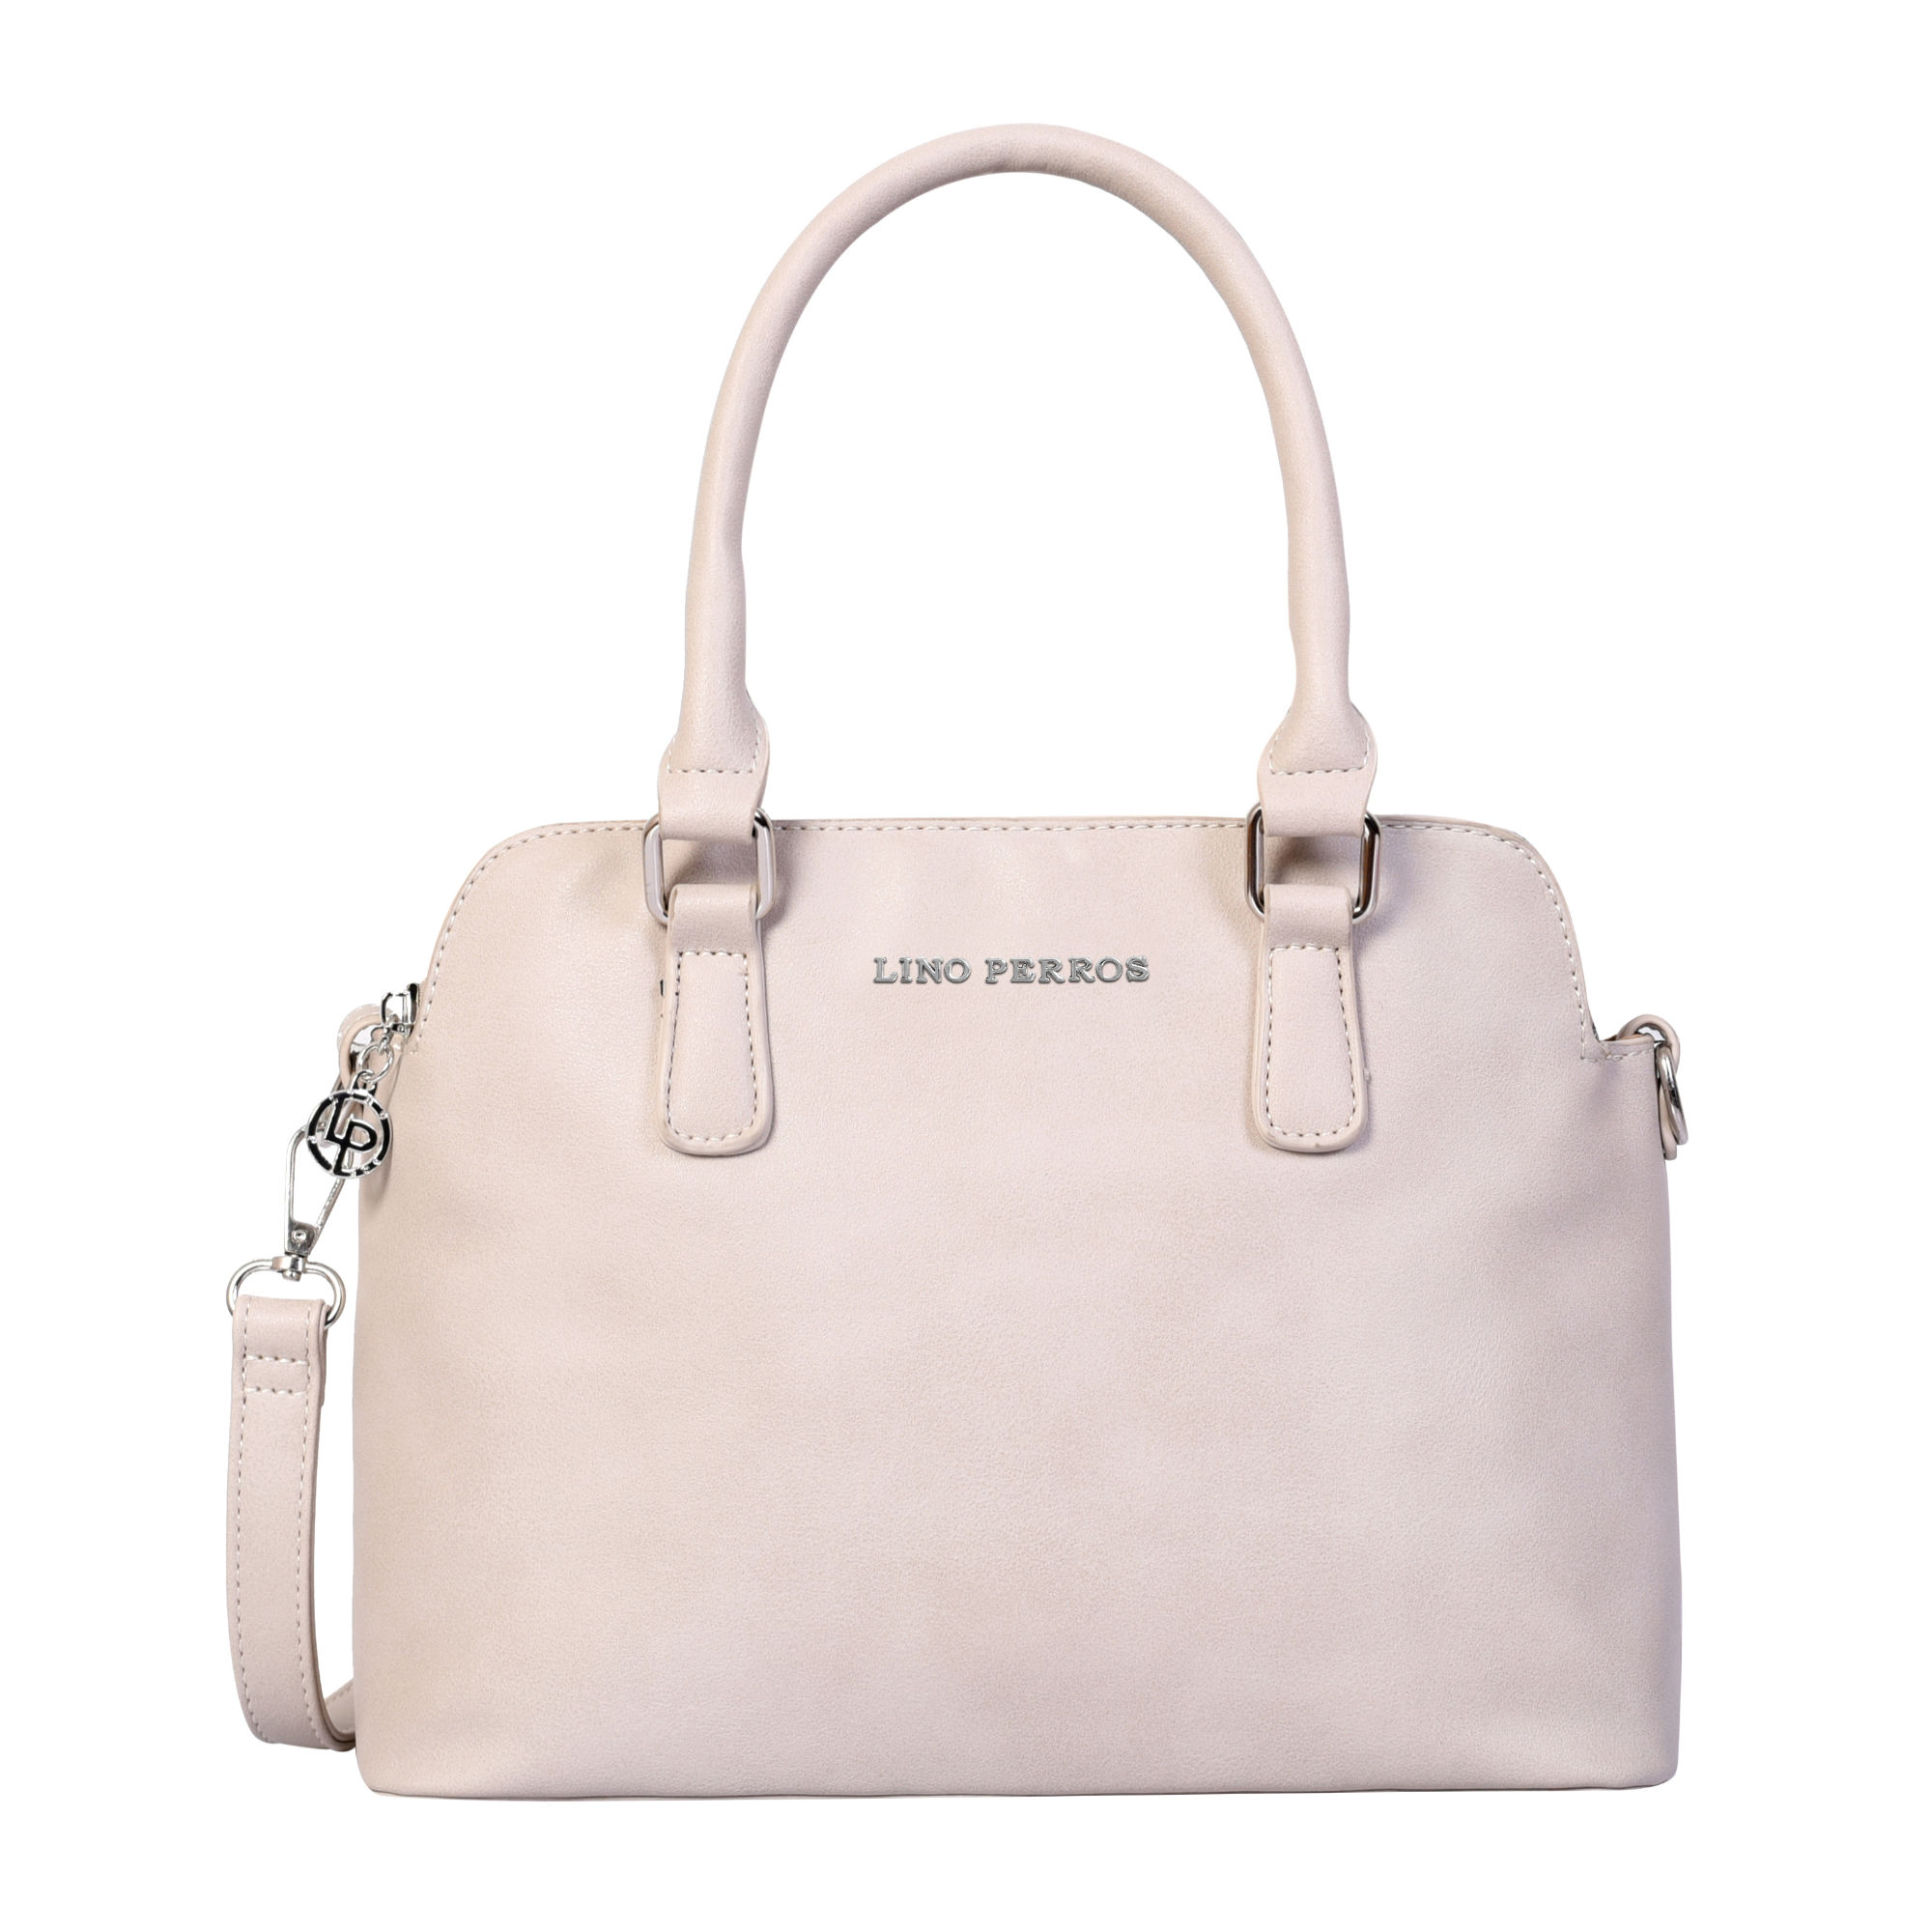 lino perros women's handbag